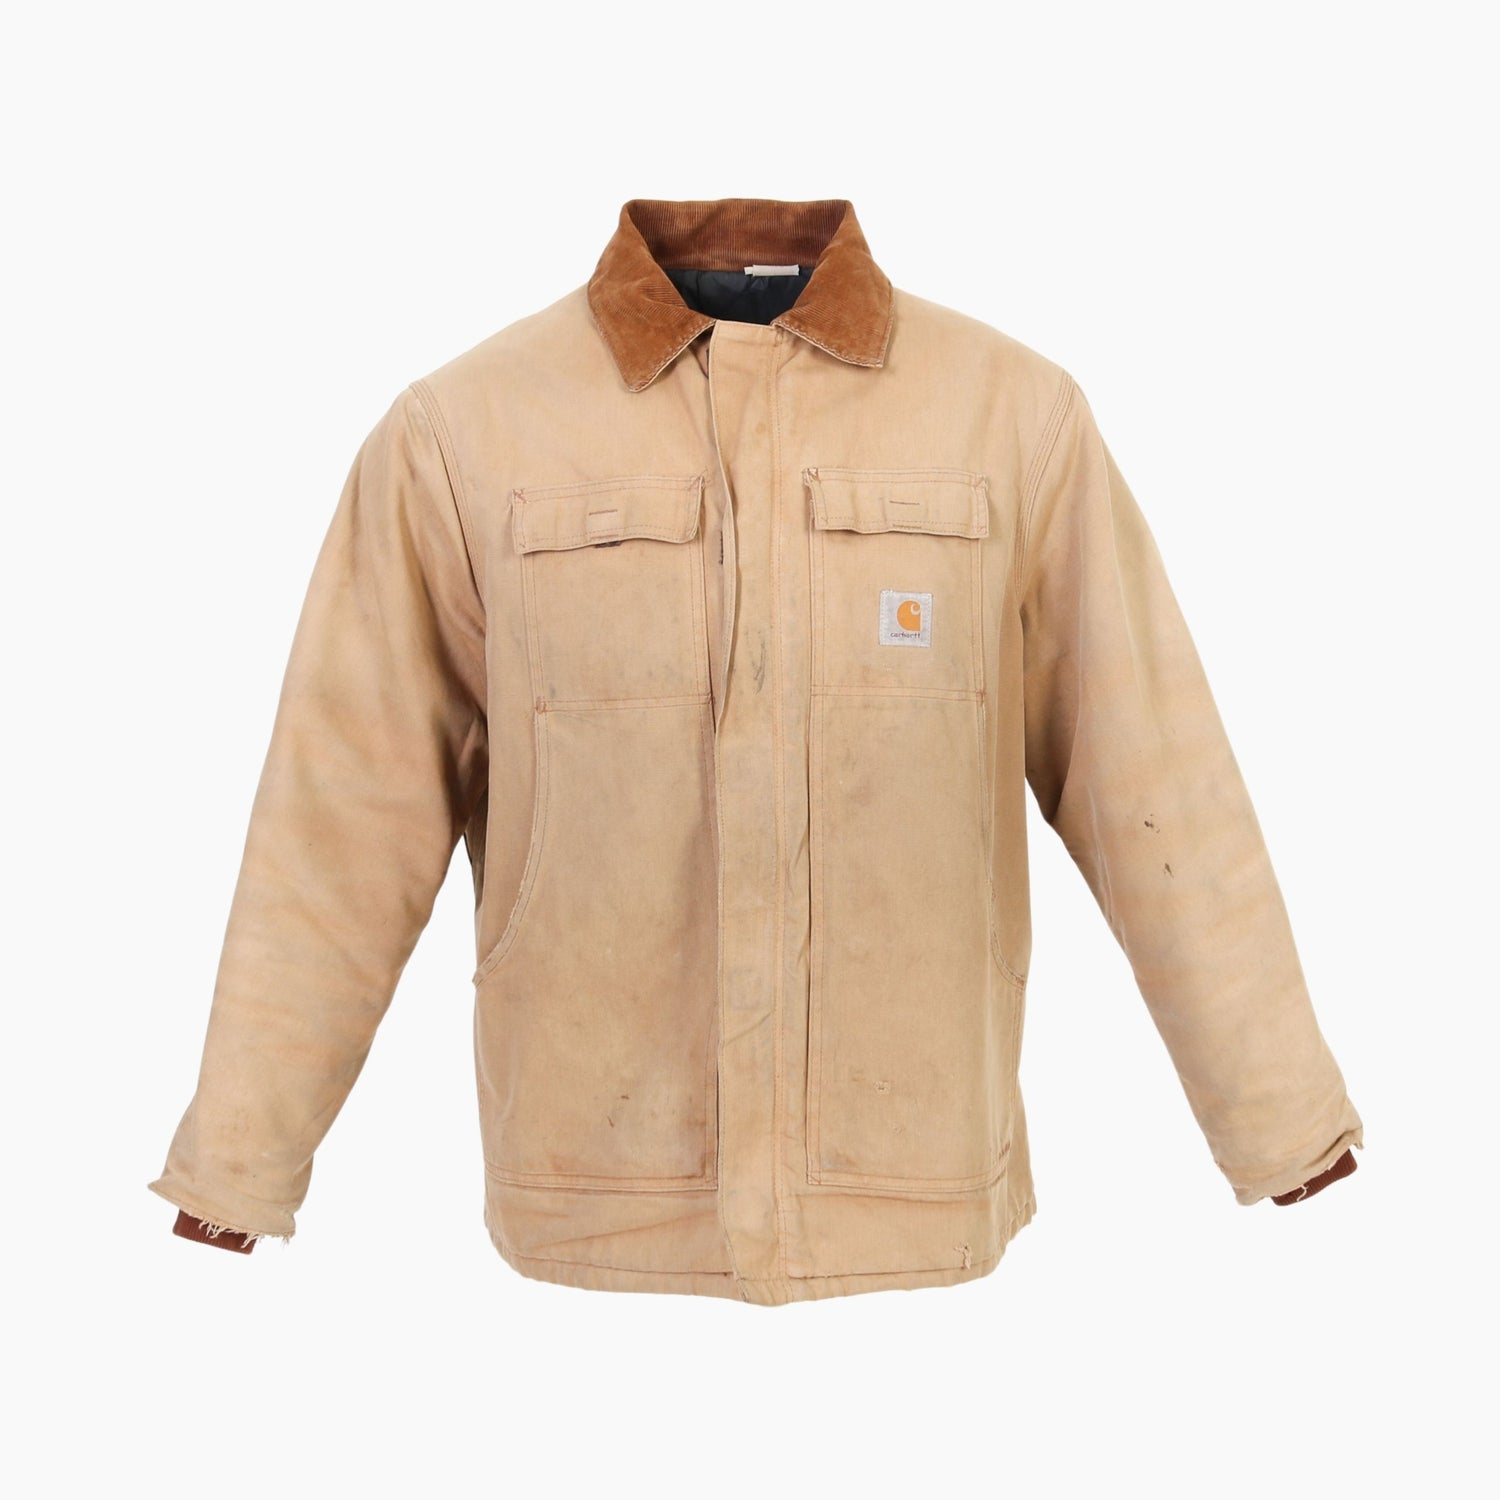 Vintage Carhartt Arctic Jacket